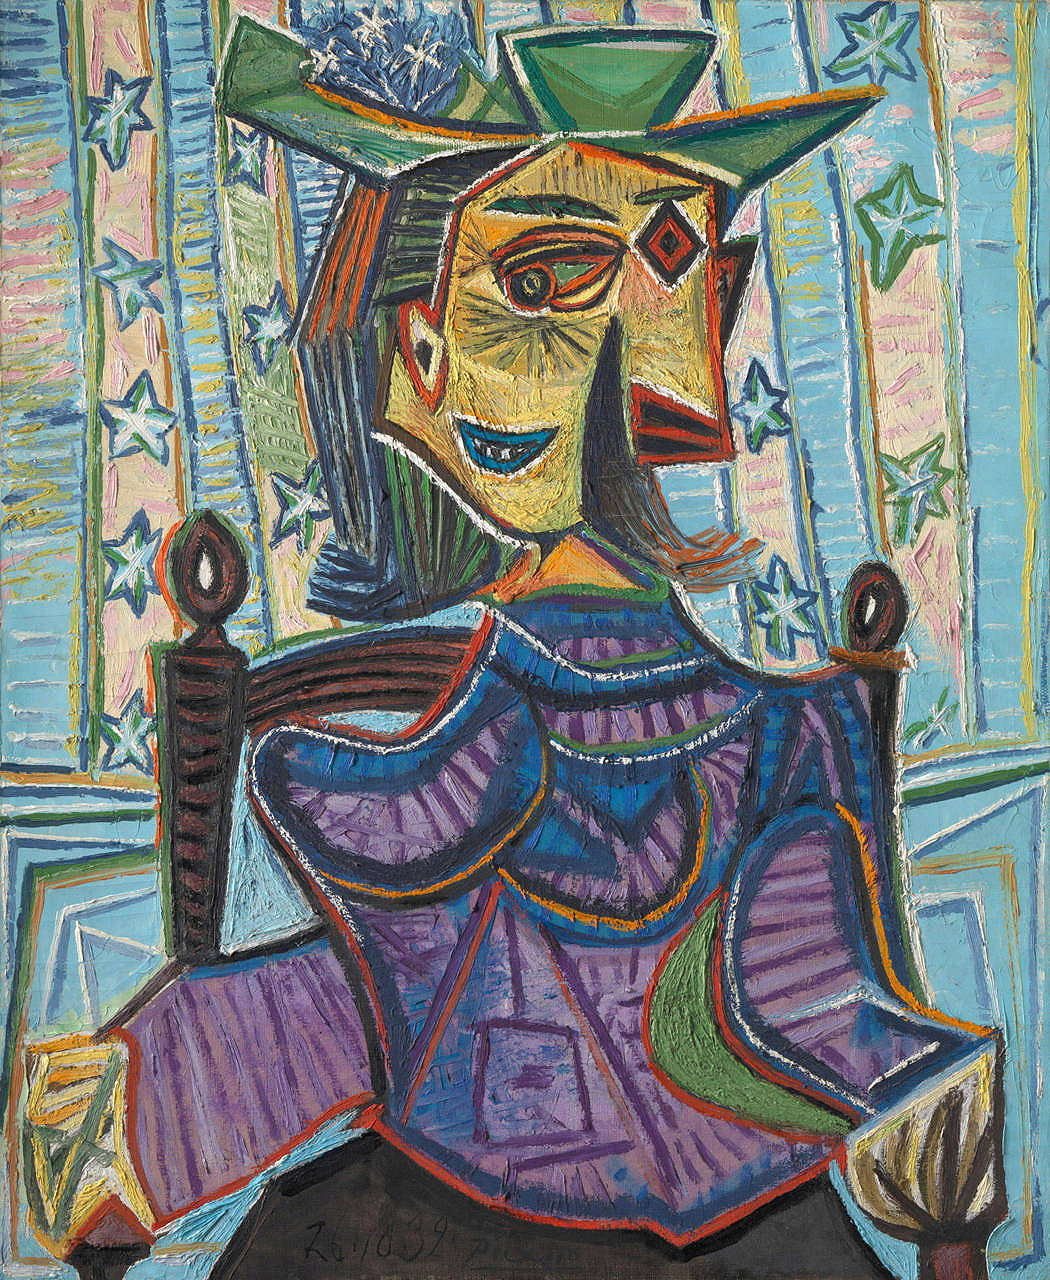 Dora Maar in an Armchair by Pablo Picasso - 1939 - 73.3 x 60.3 cm Metropolitan Museum of Art